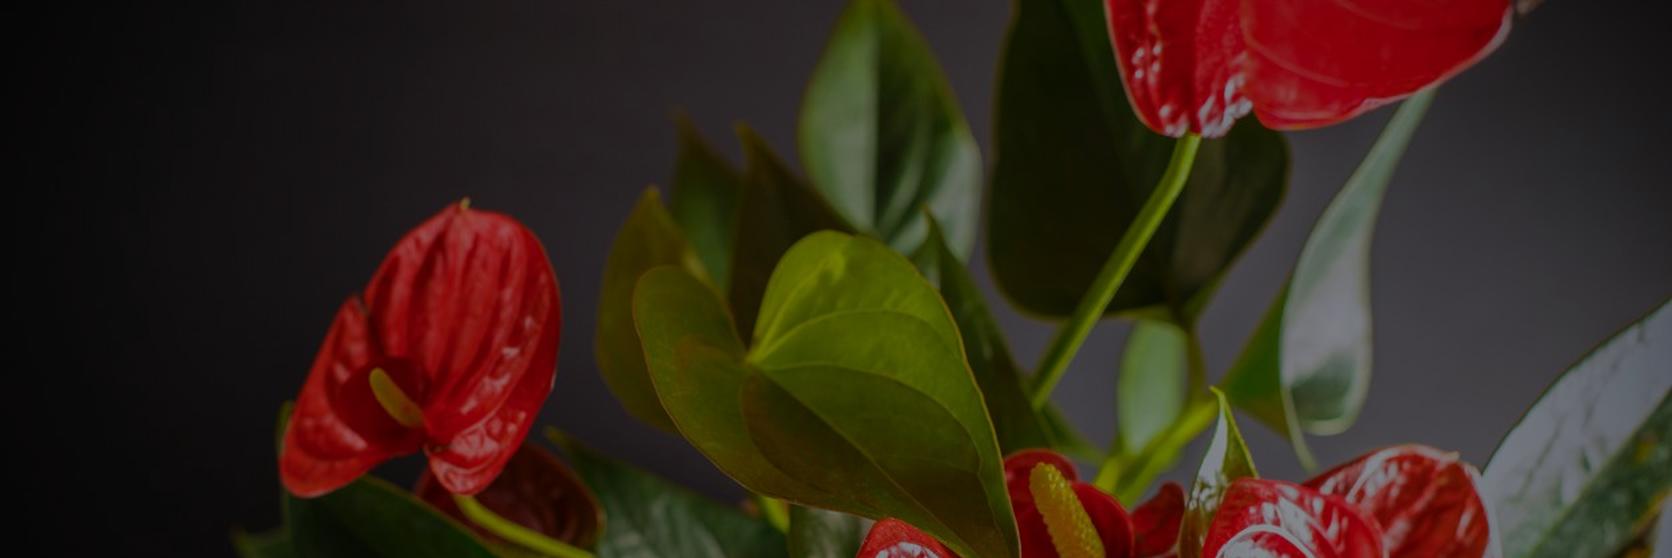 anthurium-red-flowers-plant